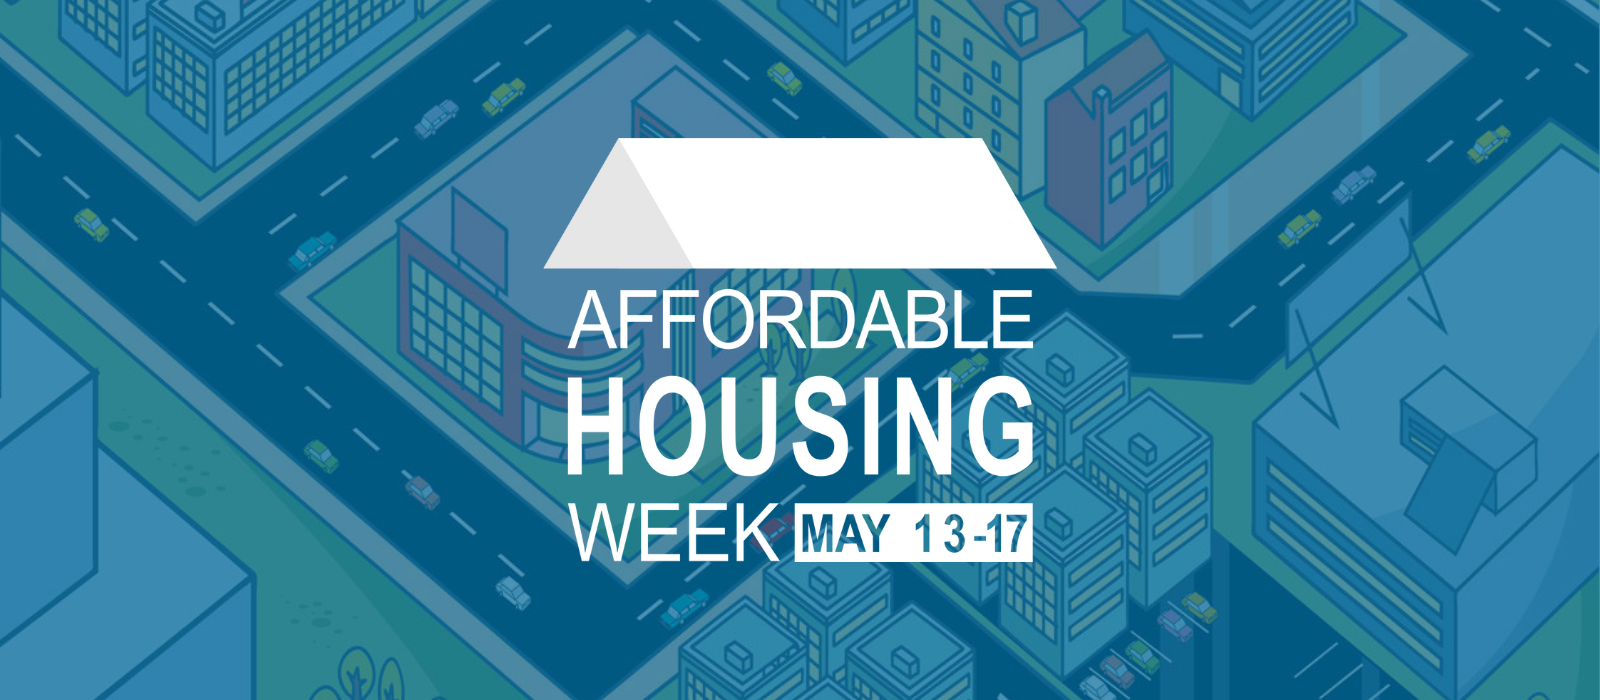 Affordable Housing Week - Housing Development Consortium